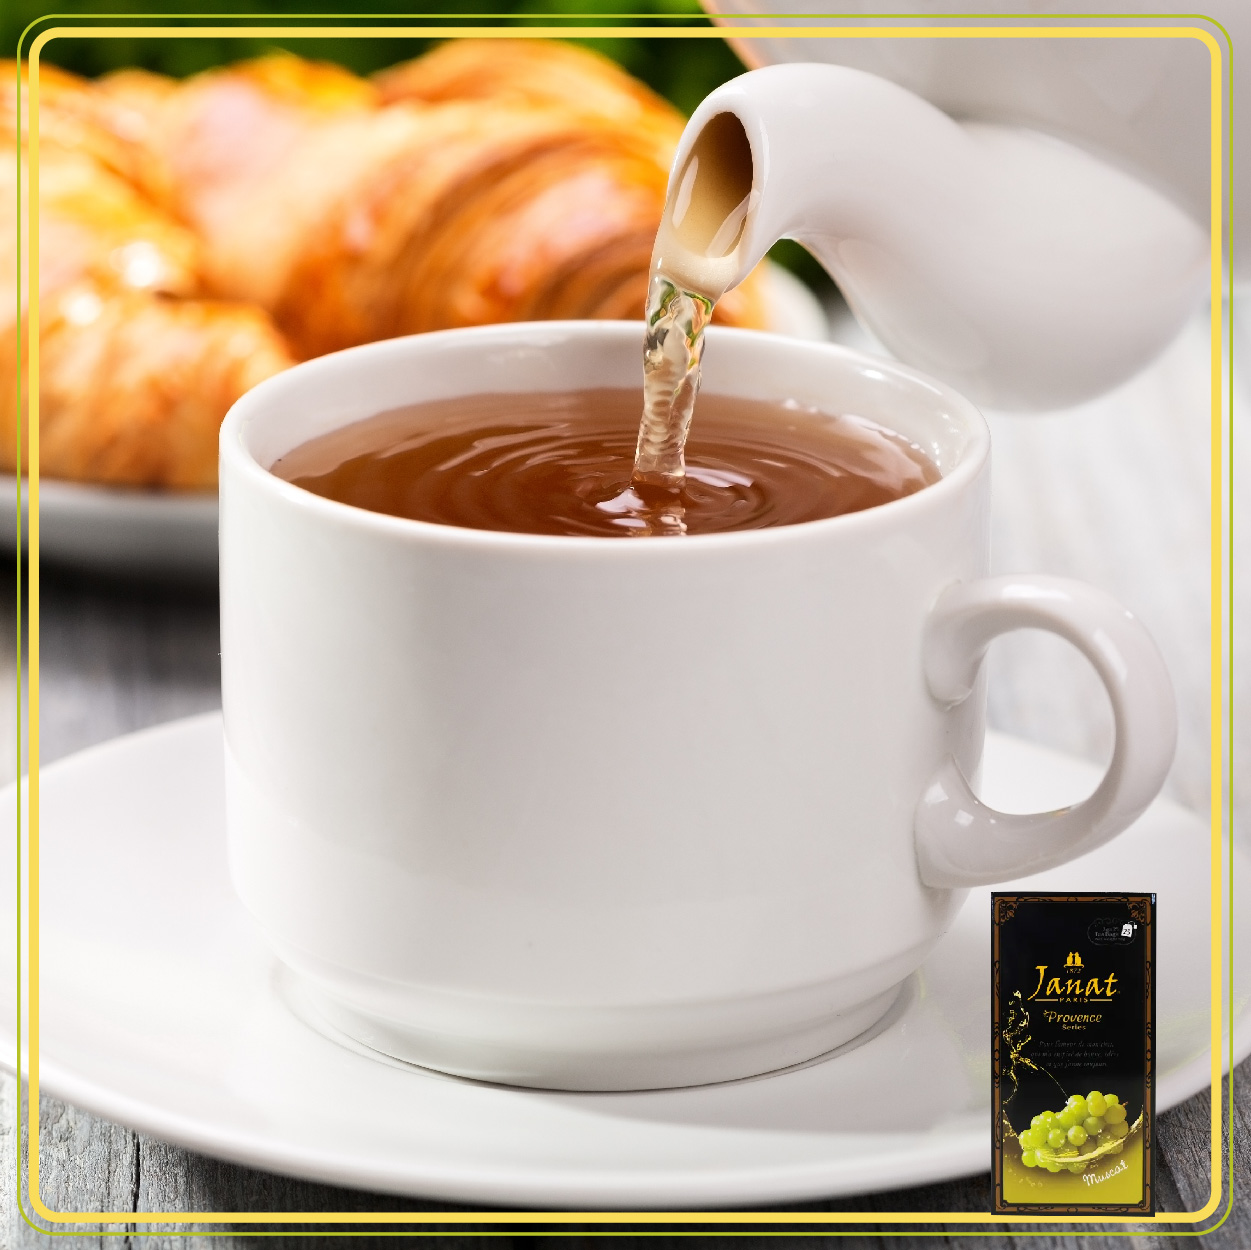 Janat 白葡萄風味茶 麝香葡萄與紅茶的完美結合 享受下午茶的休閒時光